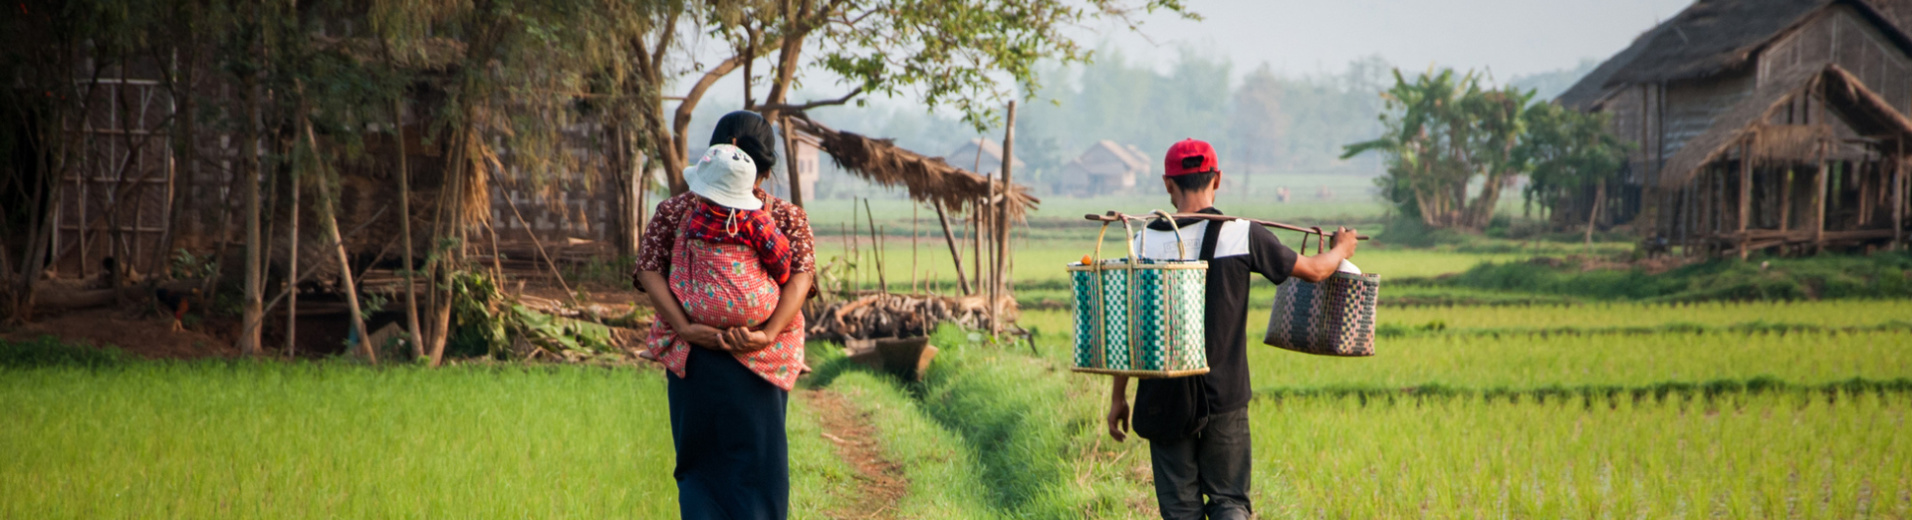 famille dans champ de riz, myanmar